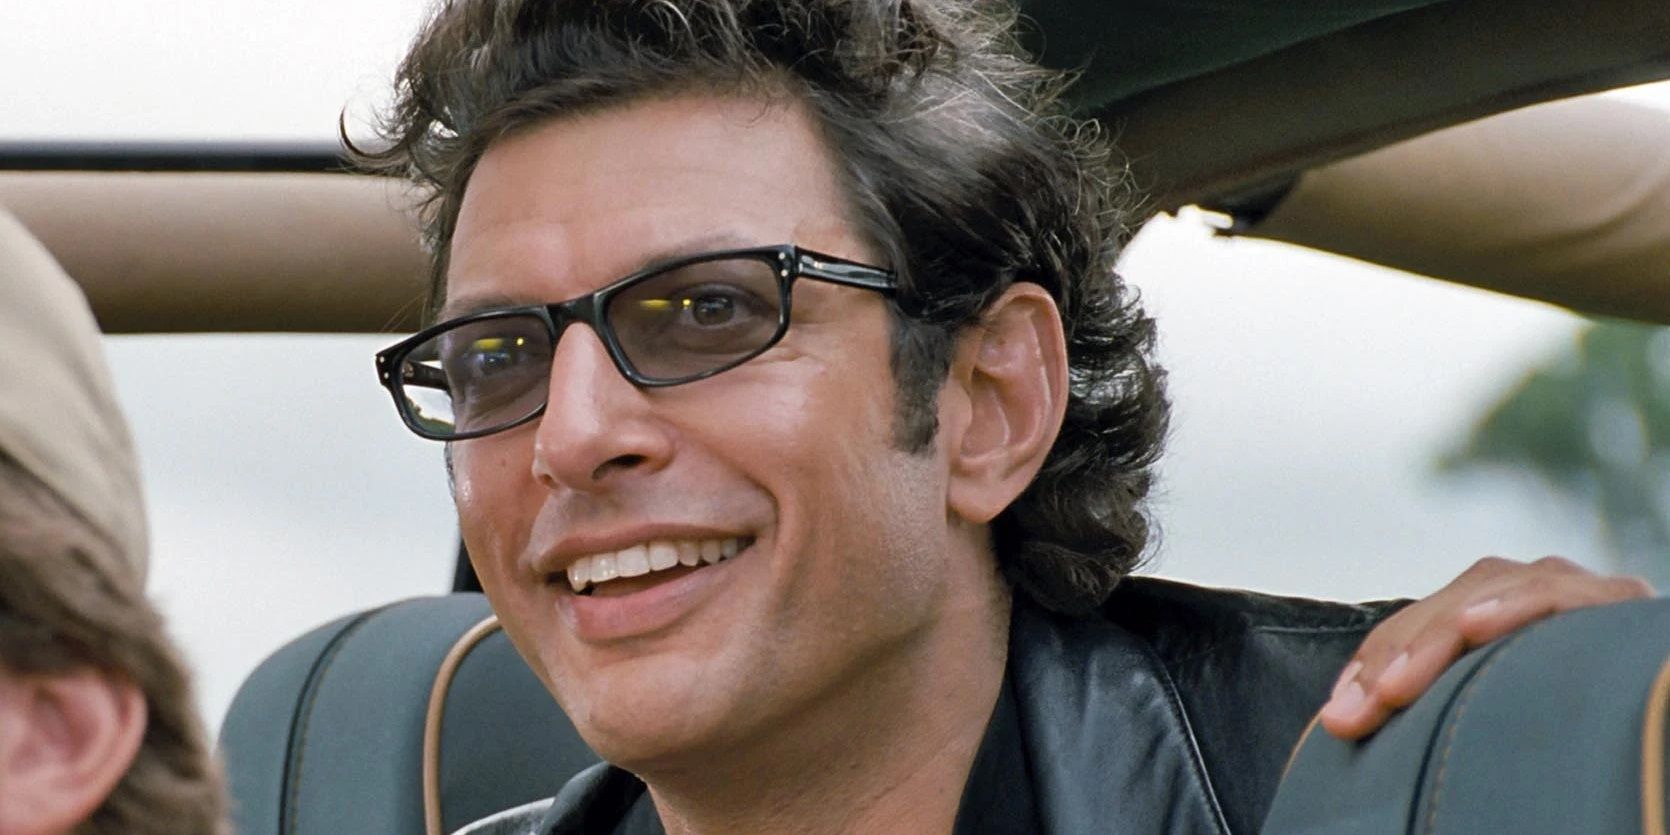 Jeff Goldblum smiling in Jurassic Park